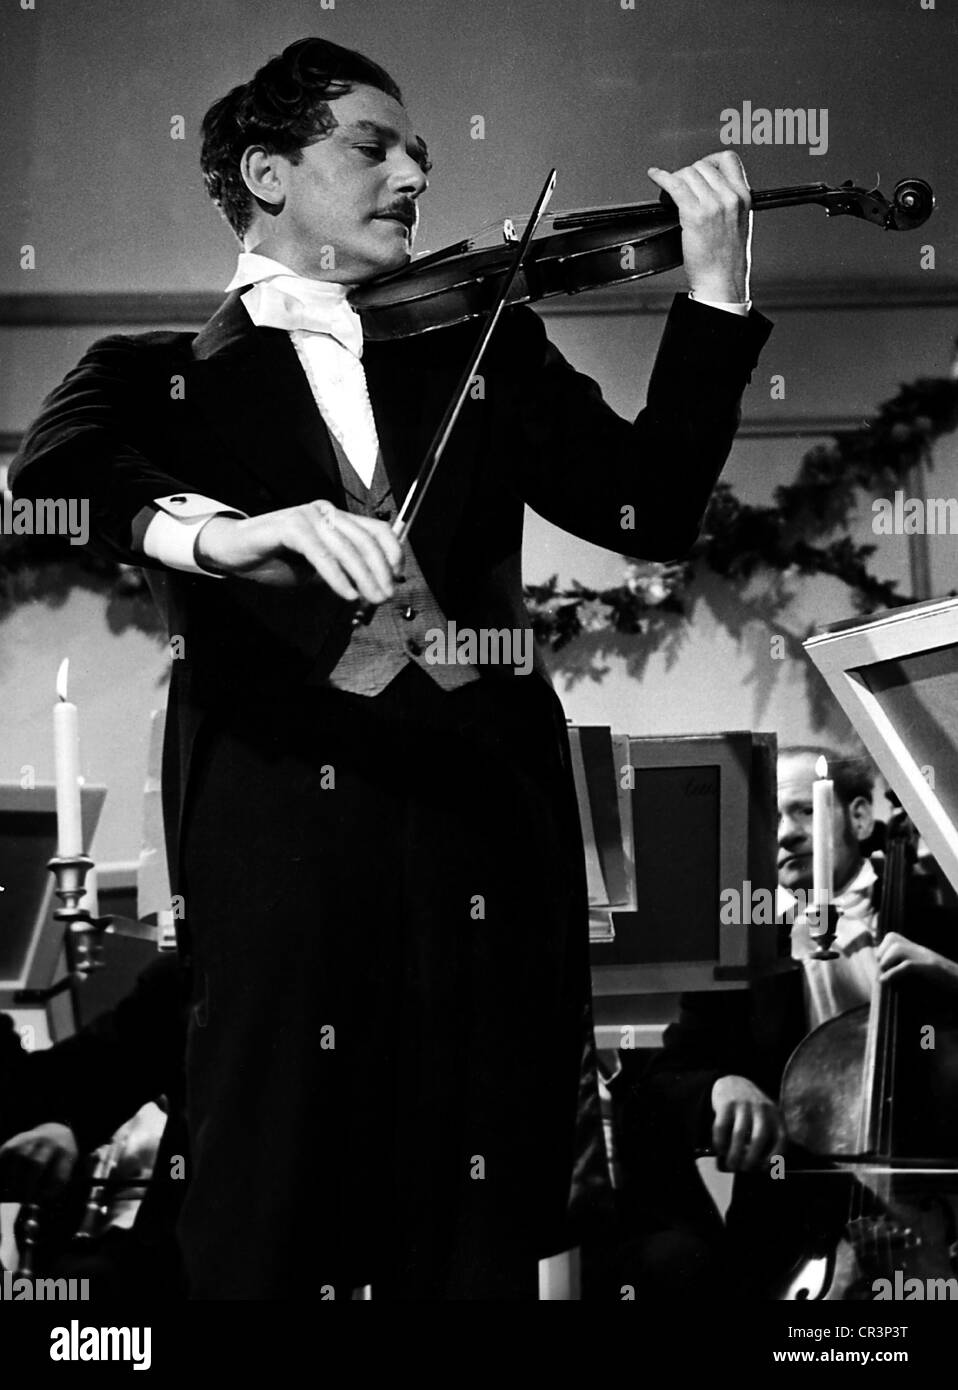 Walbrook, Anton (born Adolf Anton Wohlbrueck), 19.11.1896 - 9.8.1967, Austrian actor, scene from the movie 'Wiener Walzer', as Johann Strauss, 1951, Stock Photo